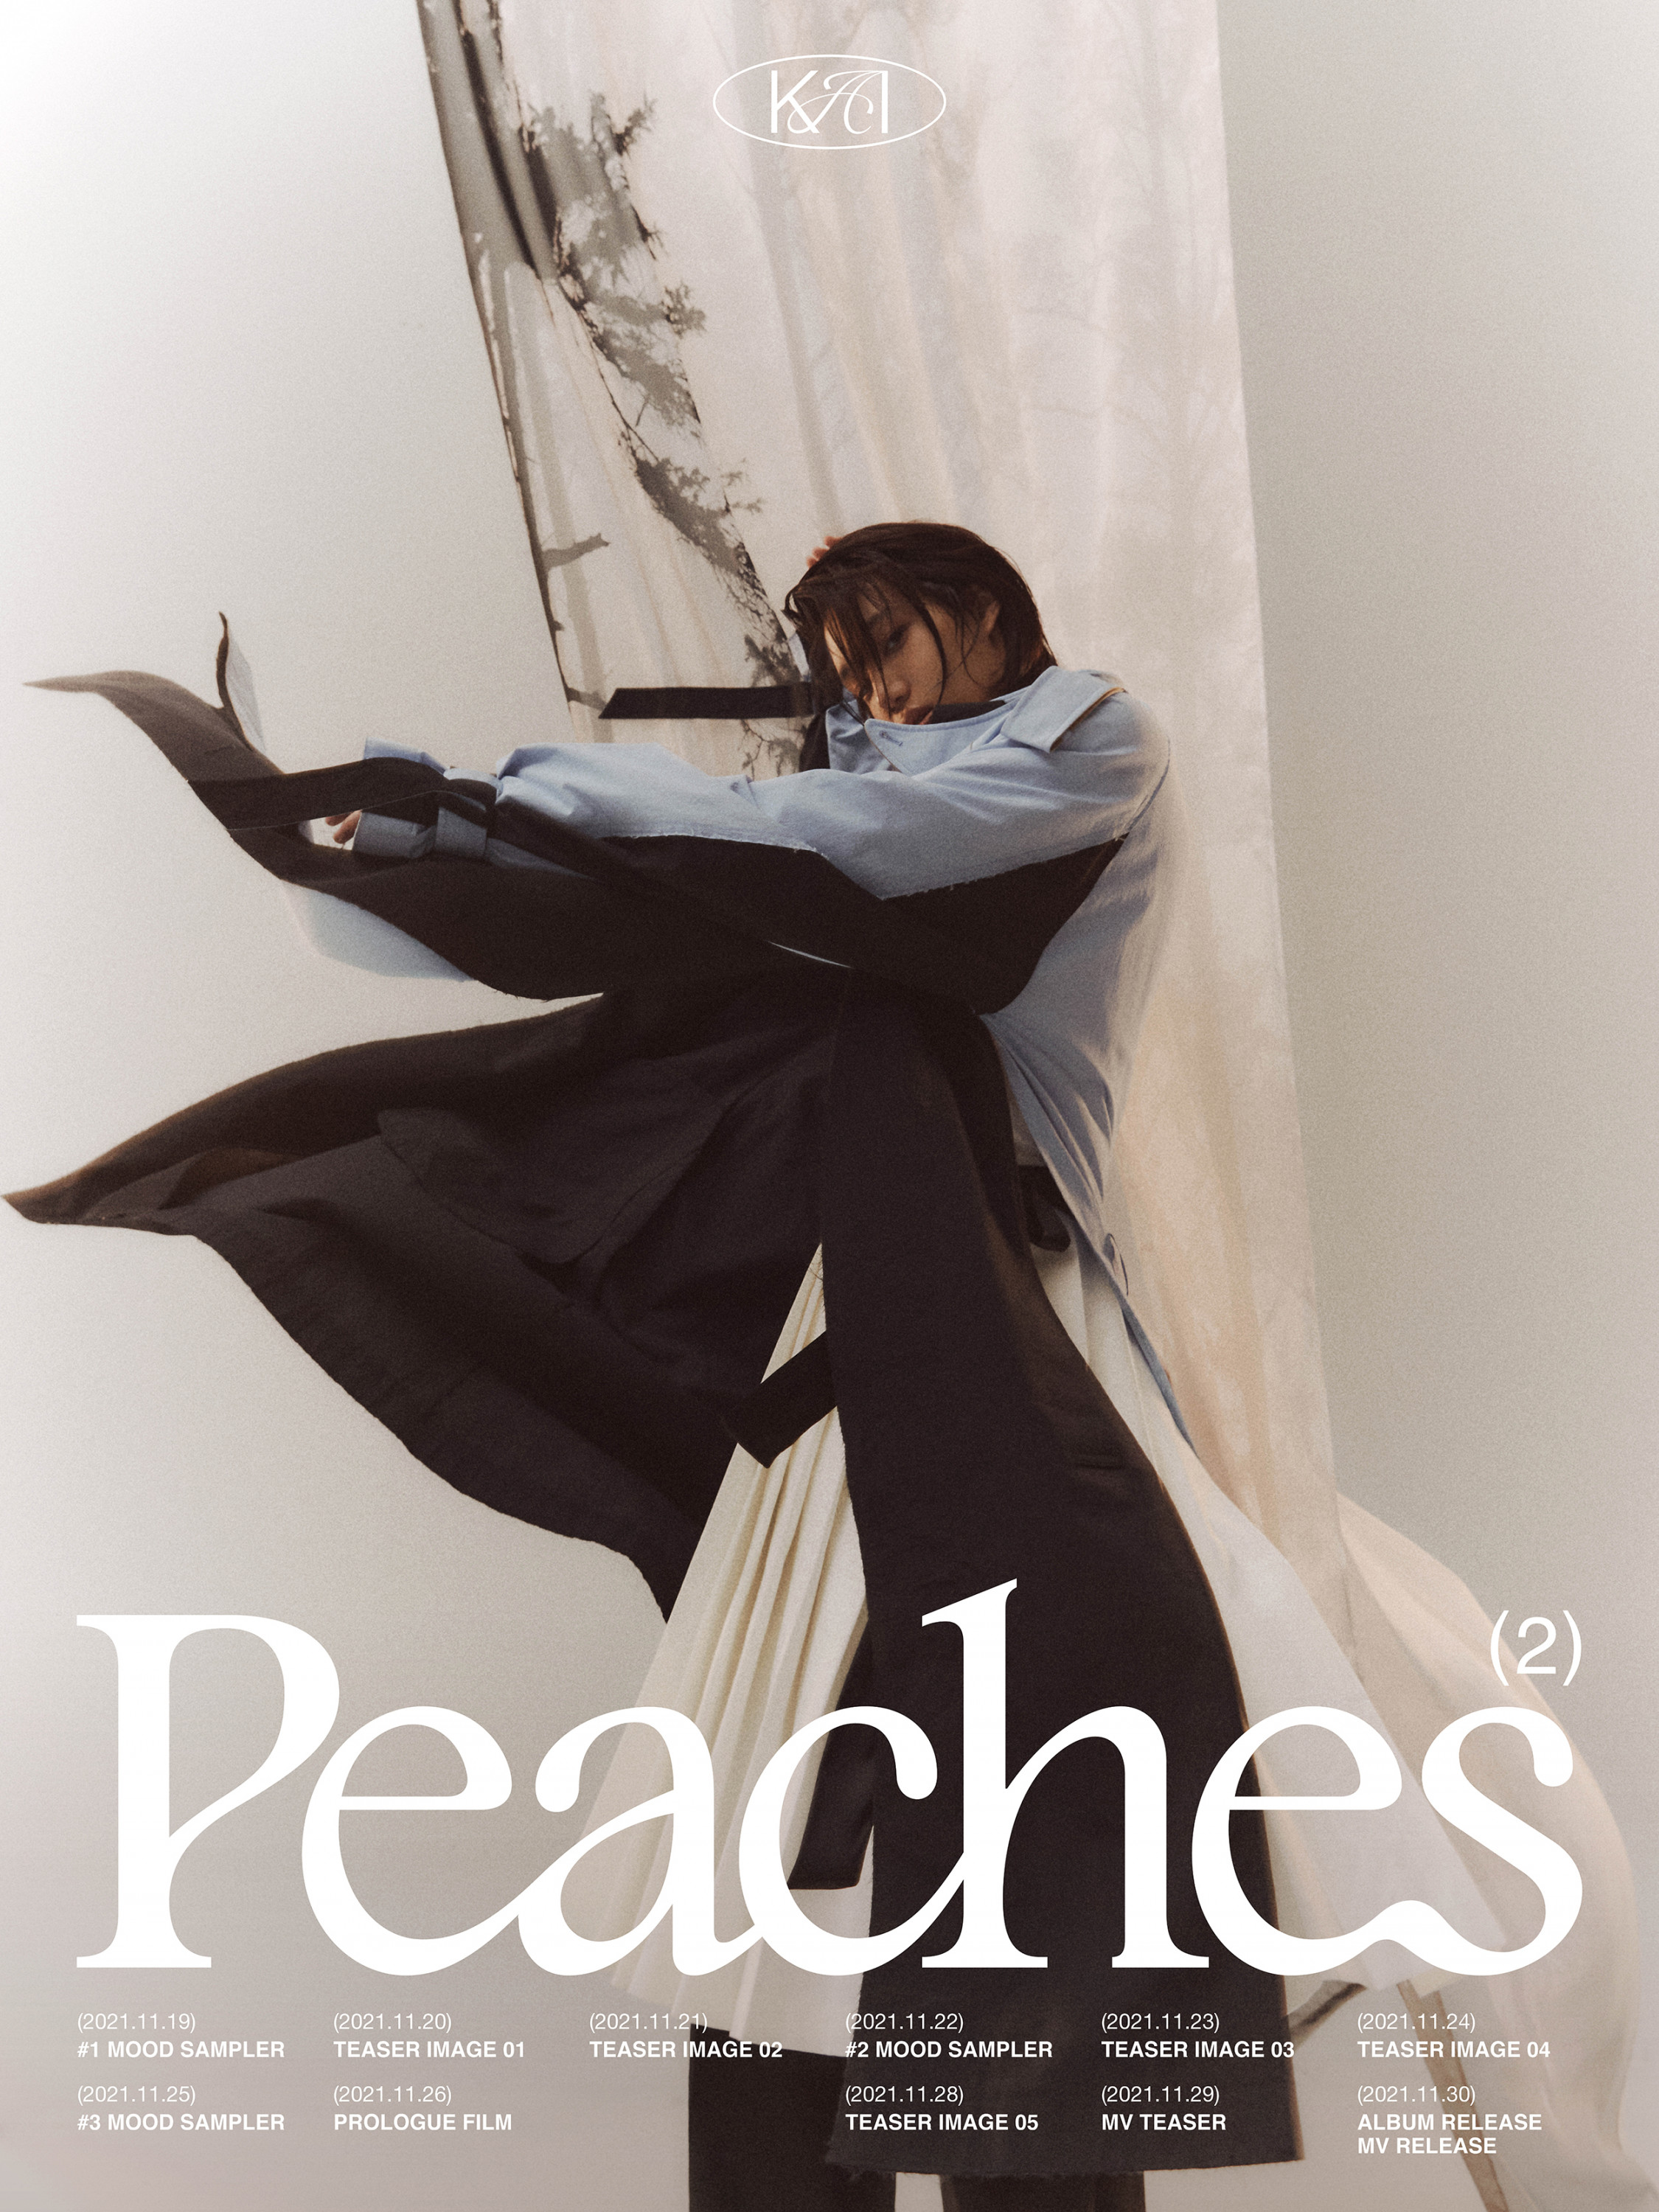 KAI 'Peaches' schedule